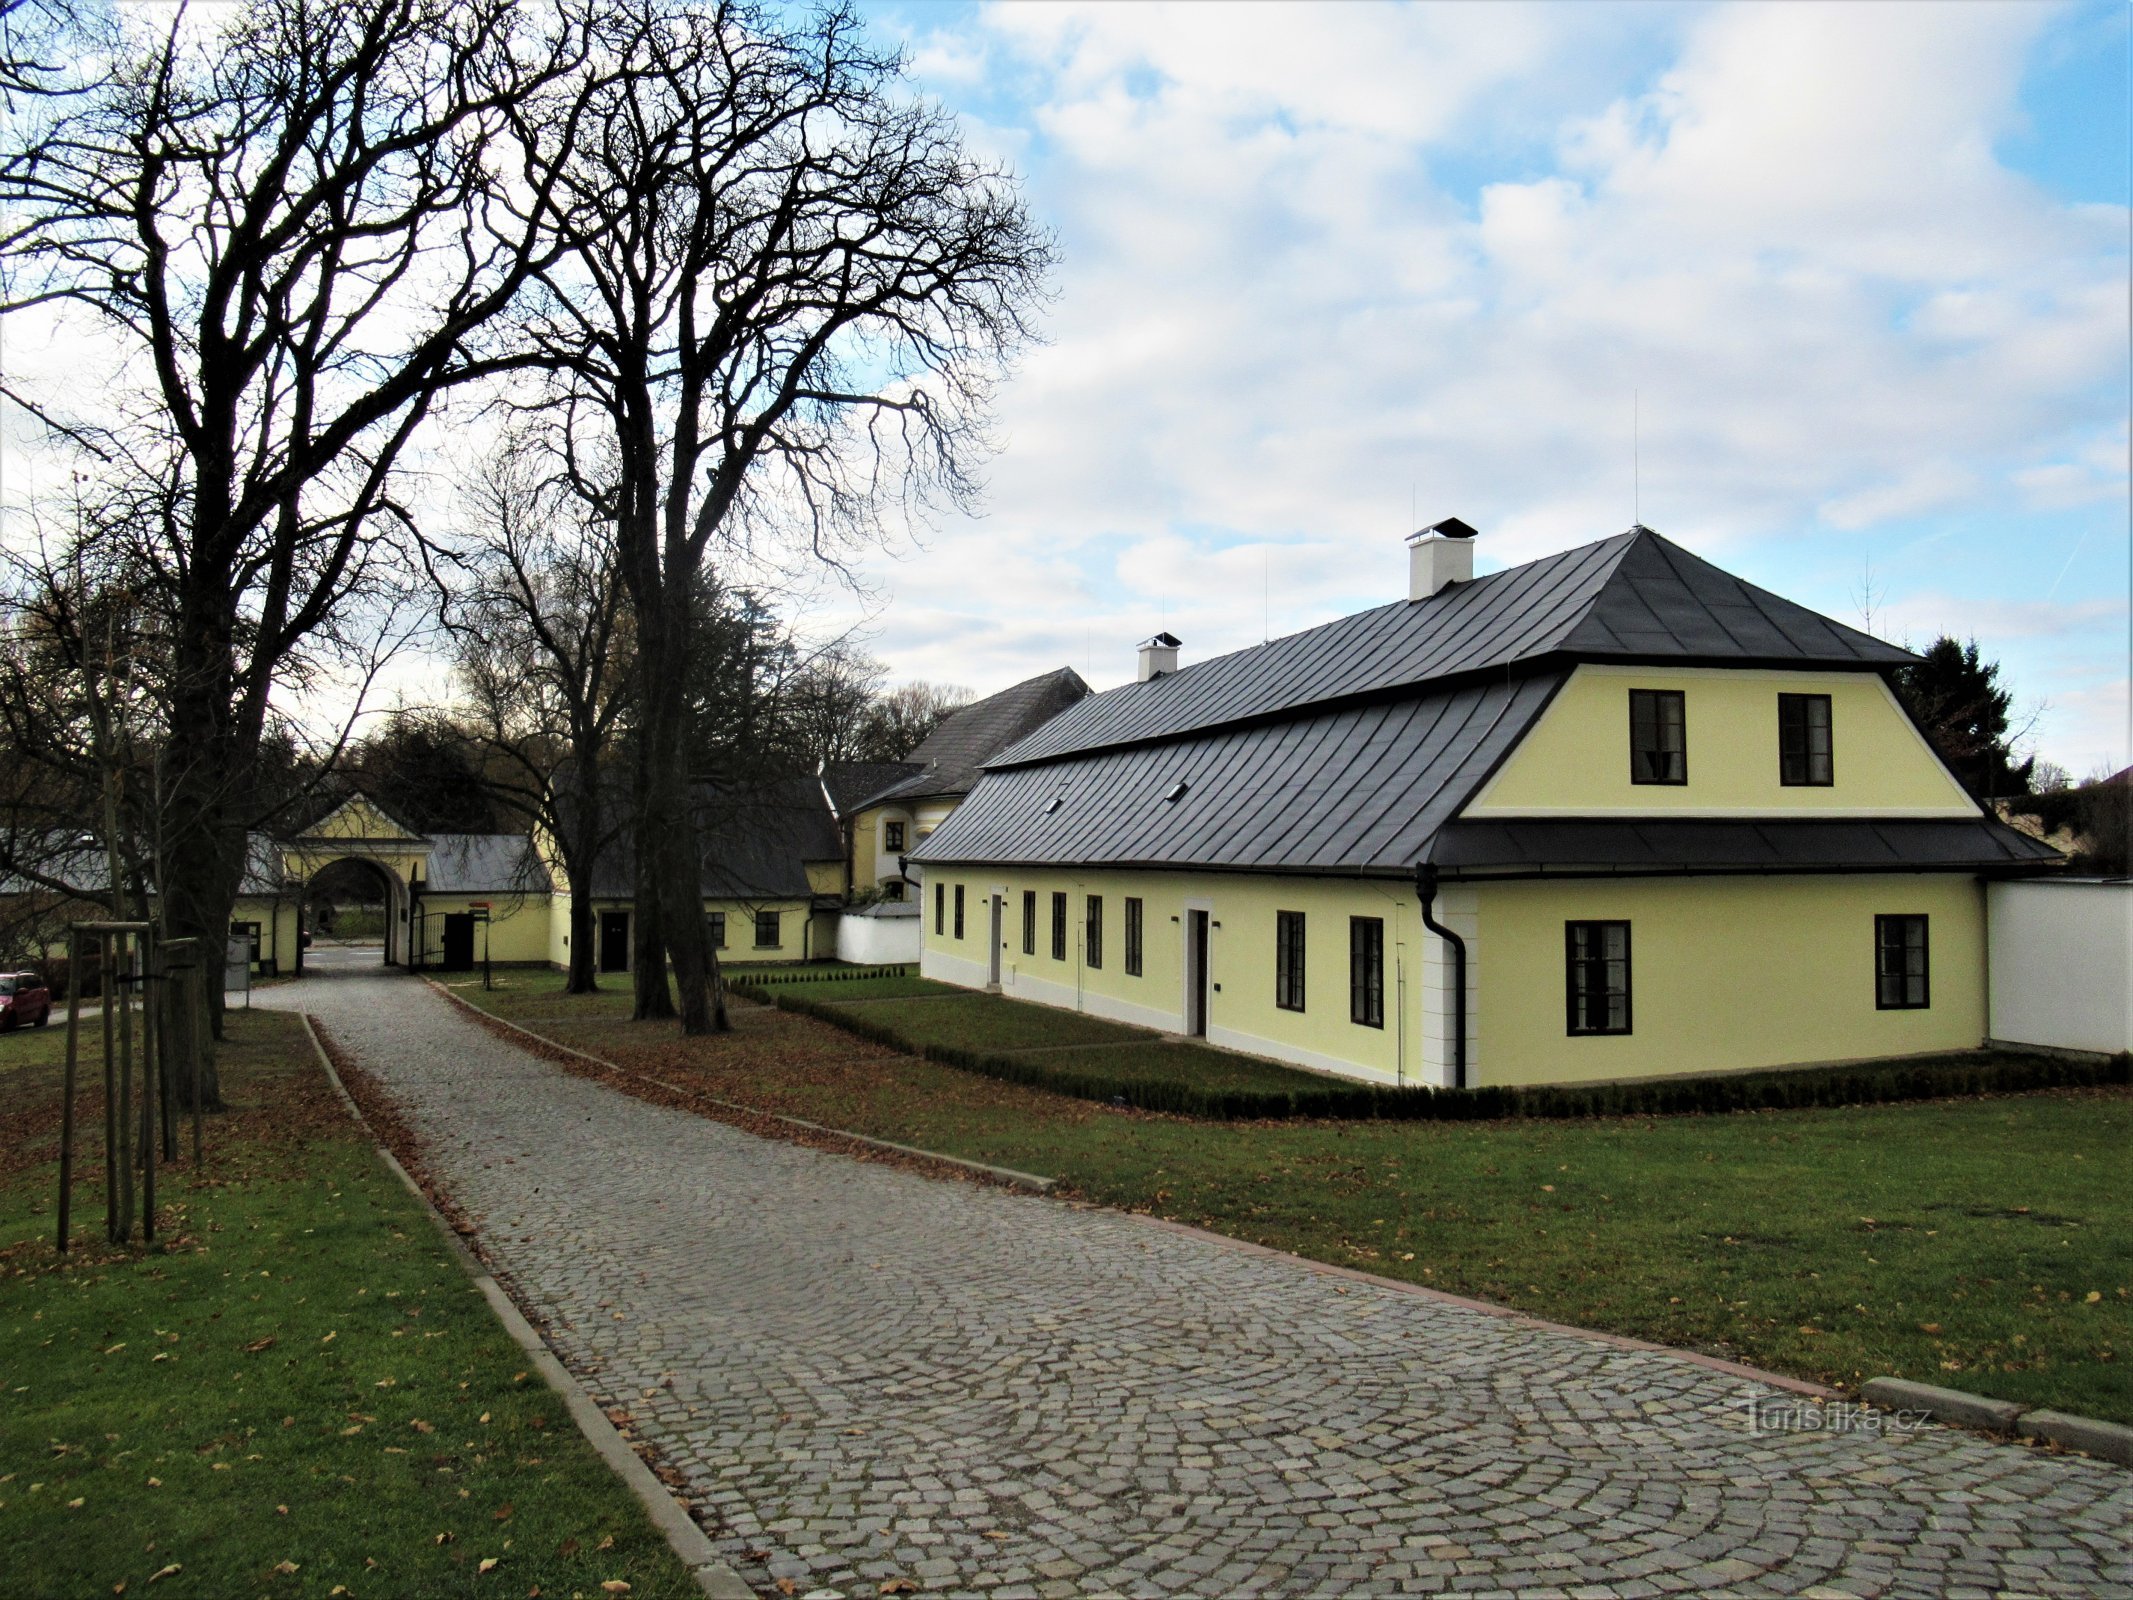 Žďár nad Sázavou - das Gärtnerhaus in der Nähe des Schlosses